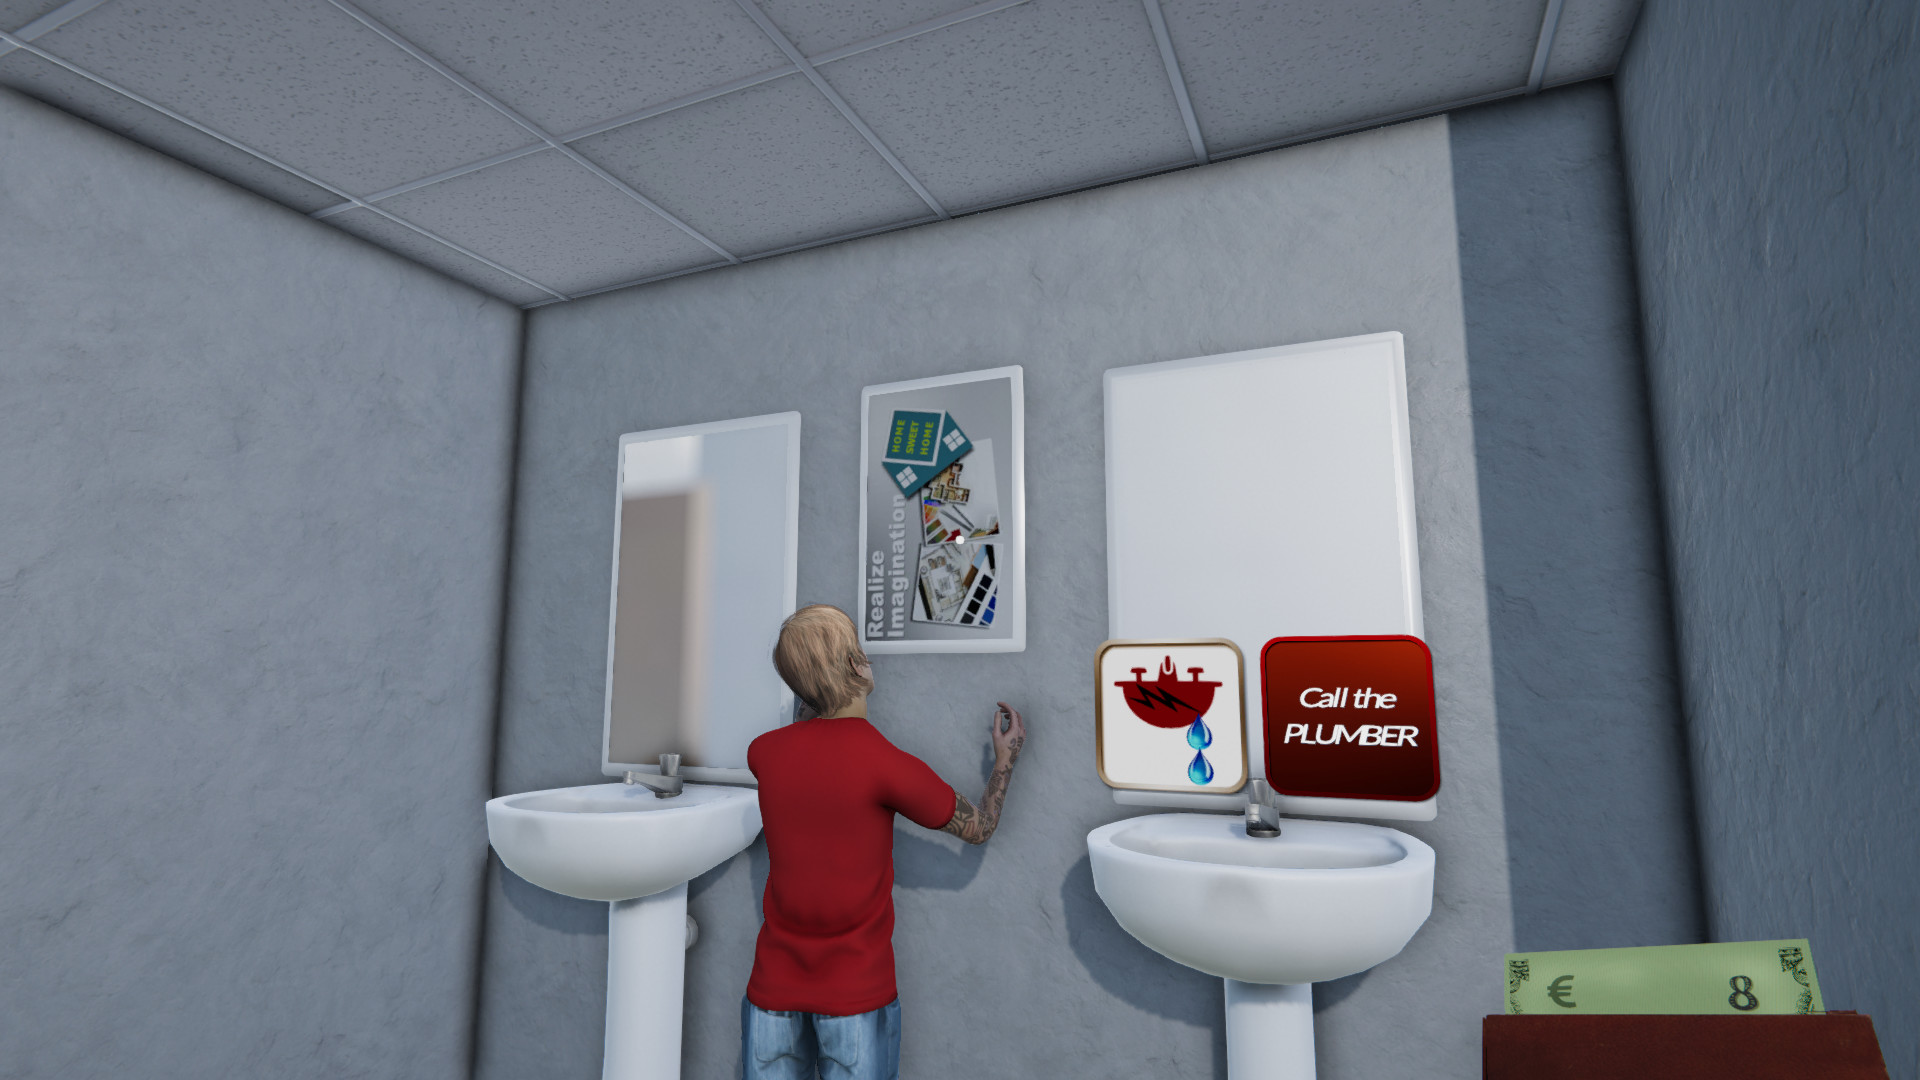 Туалетный бизнес игра онлайн как в валберис заказать по артикулу